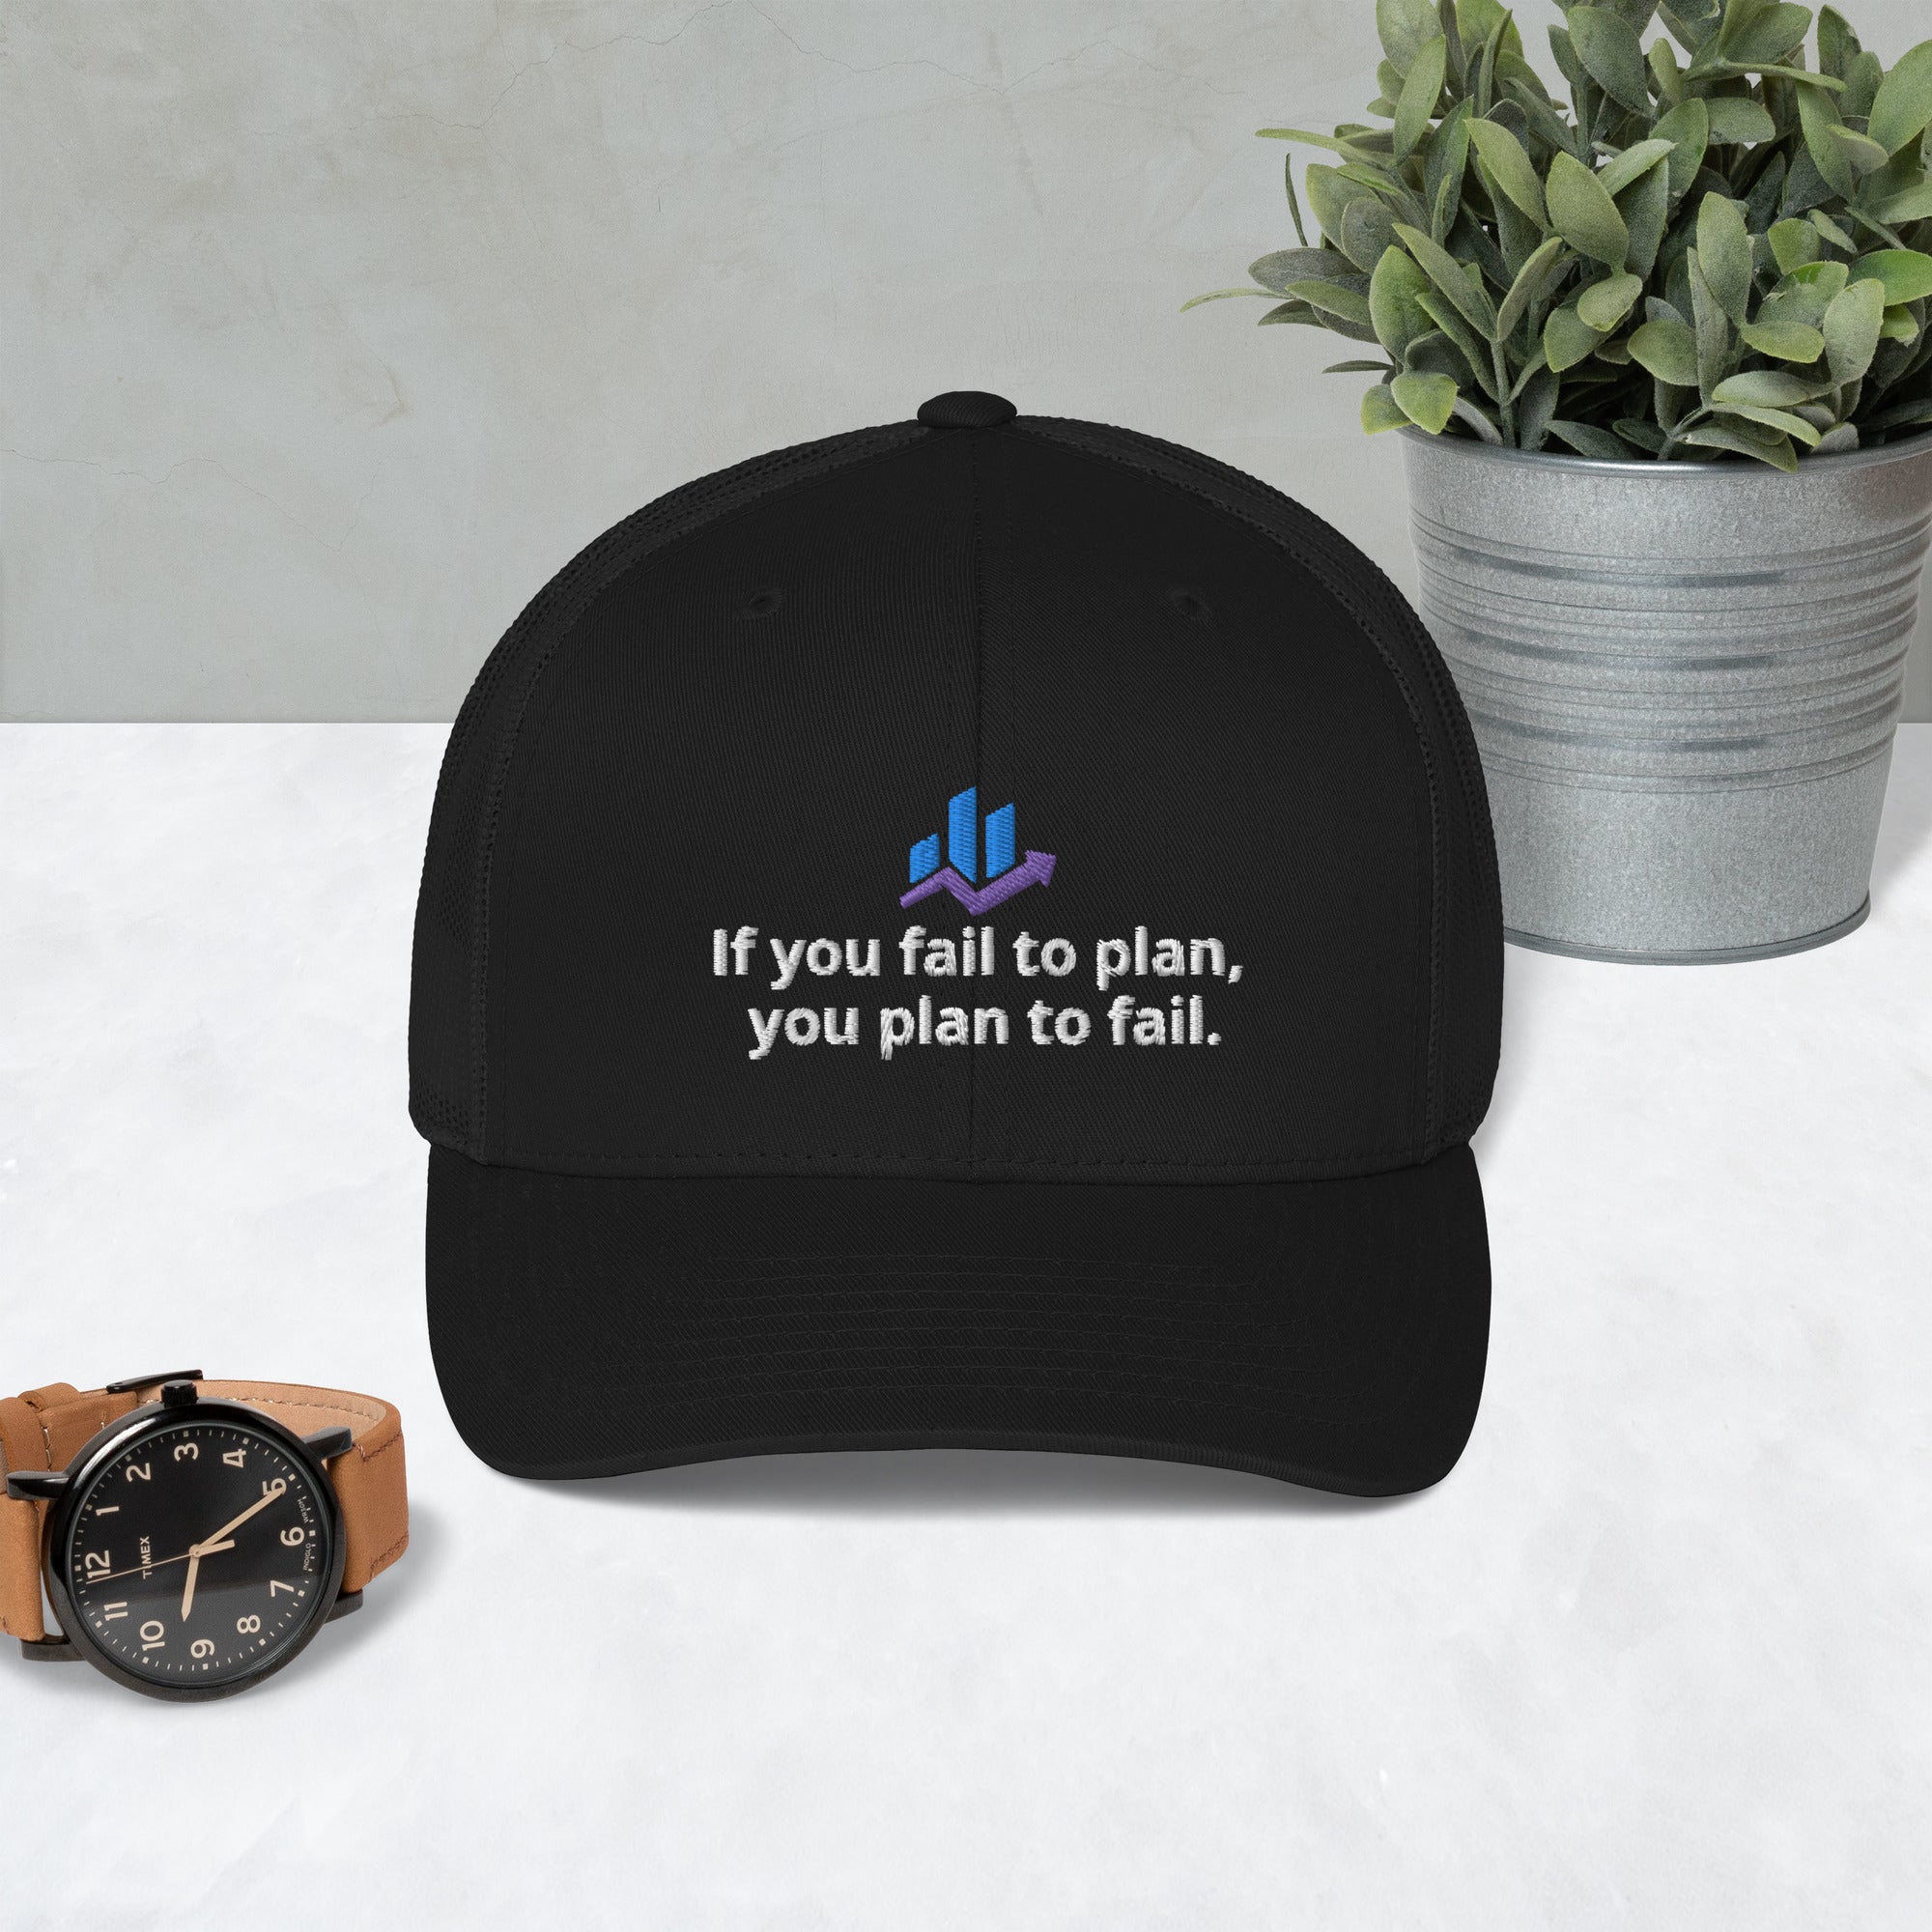 Namrood "if you fail to plan, you plan to fail" cap